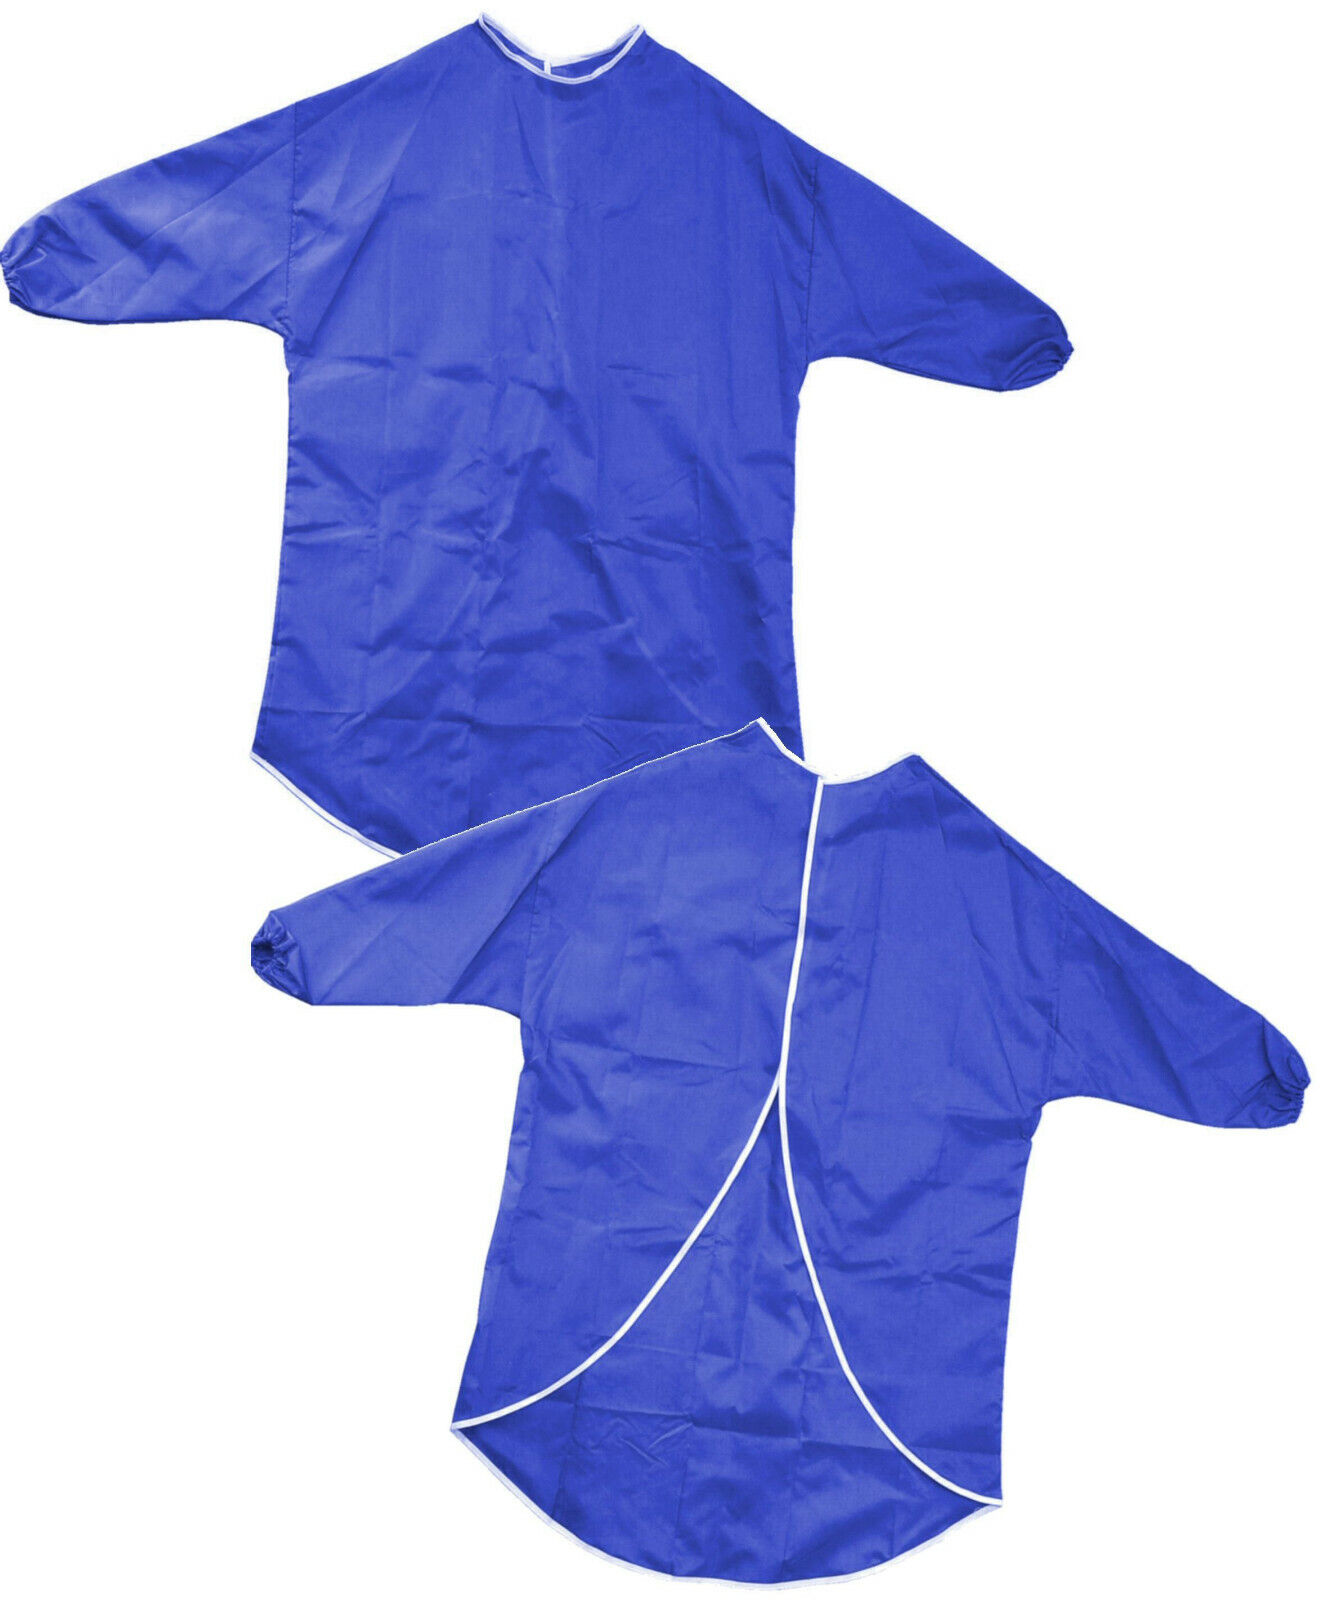 Painting apron for children, blue